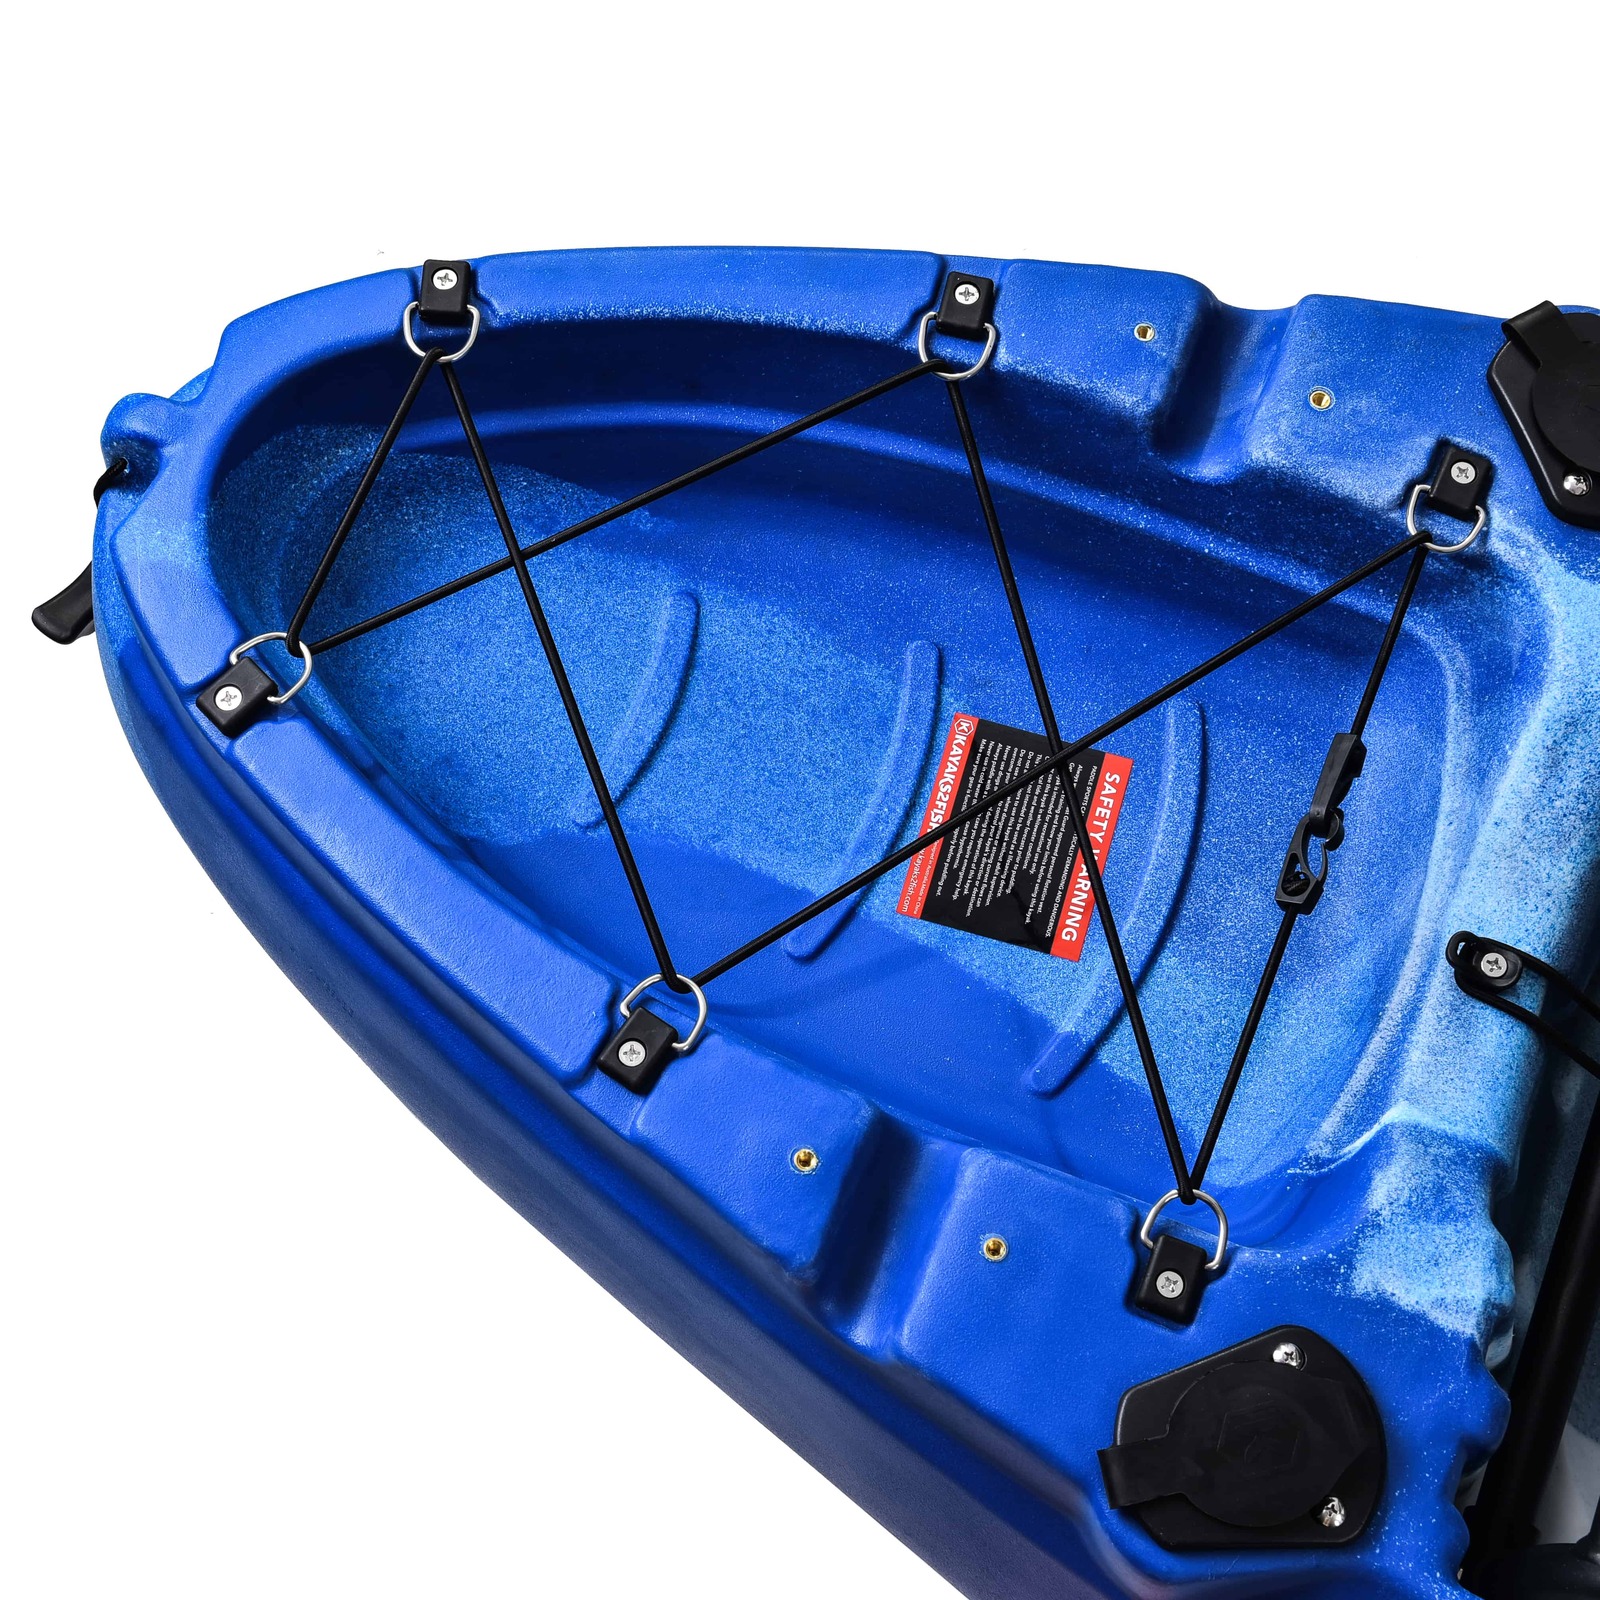 Eagle Pro Double Fishing Kayak Package - Blue Camo [Adelaide]